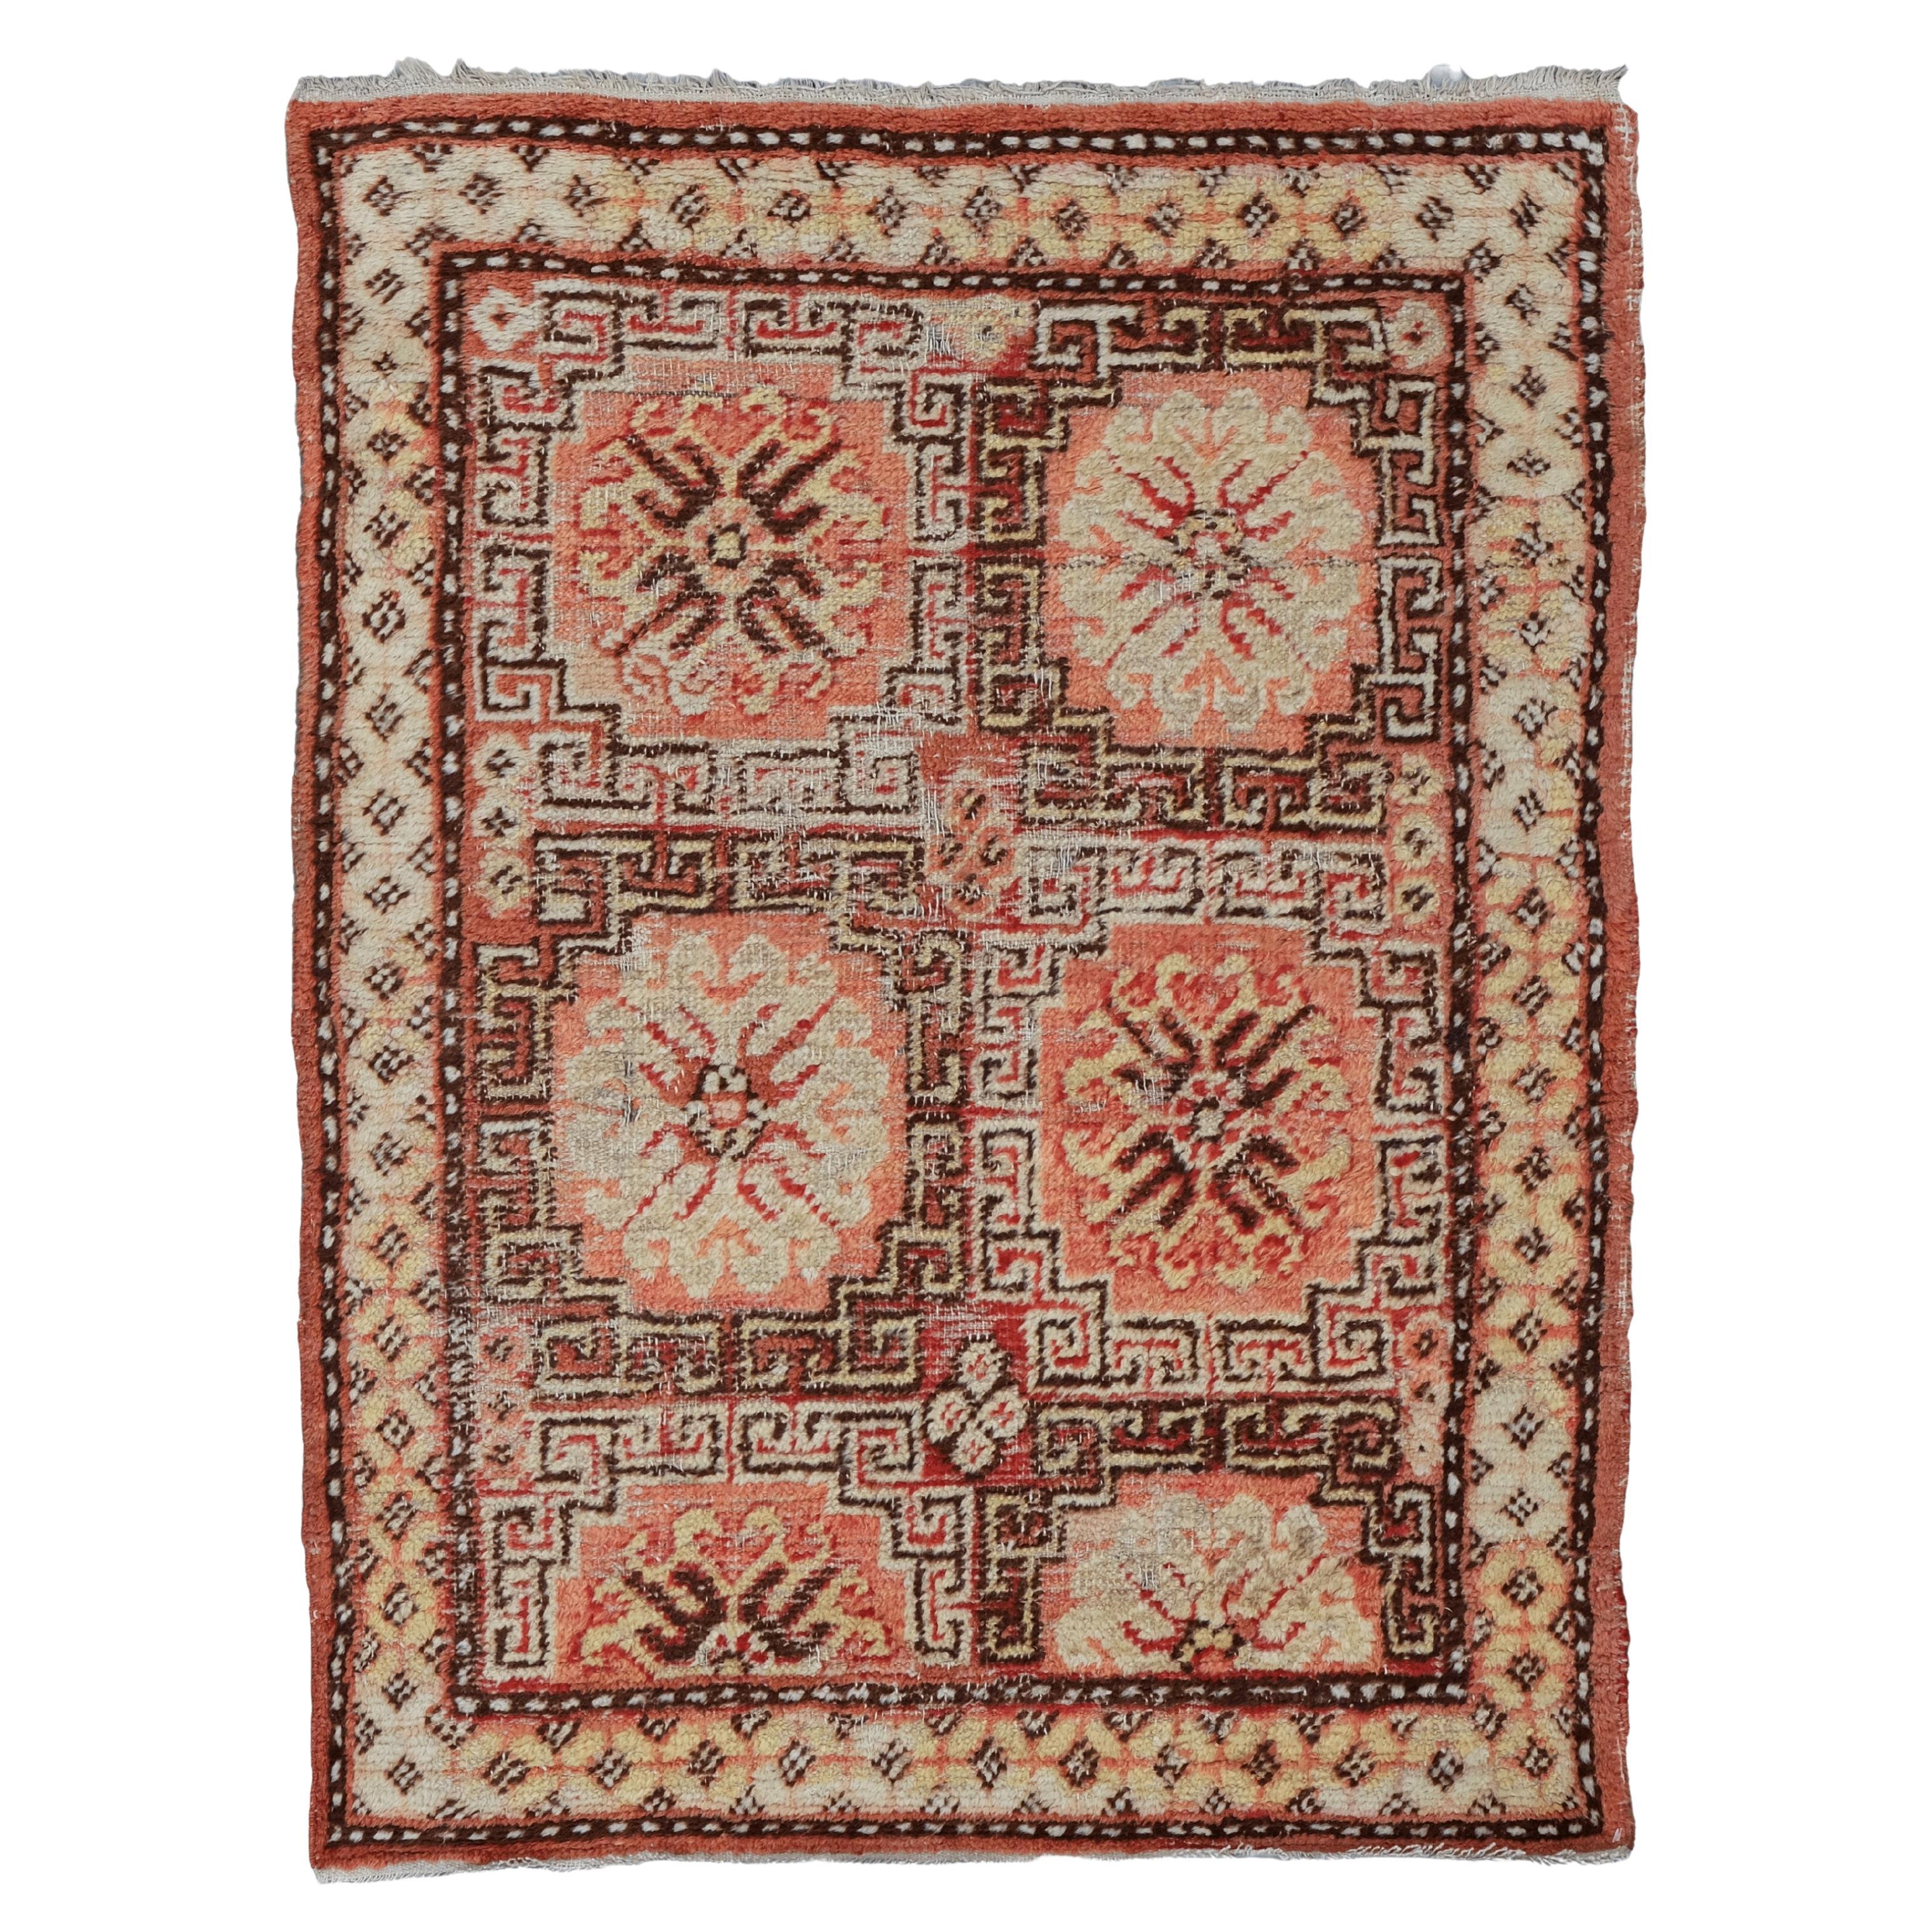 Antiker Khotan-Teppich - Khotan-Teppich des 19. Jahrhunderts, handgewebter Teppich, antiker Teppich